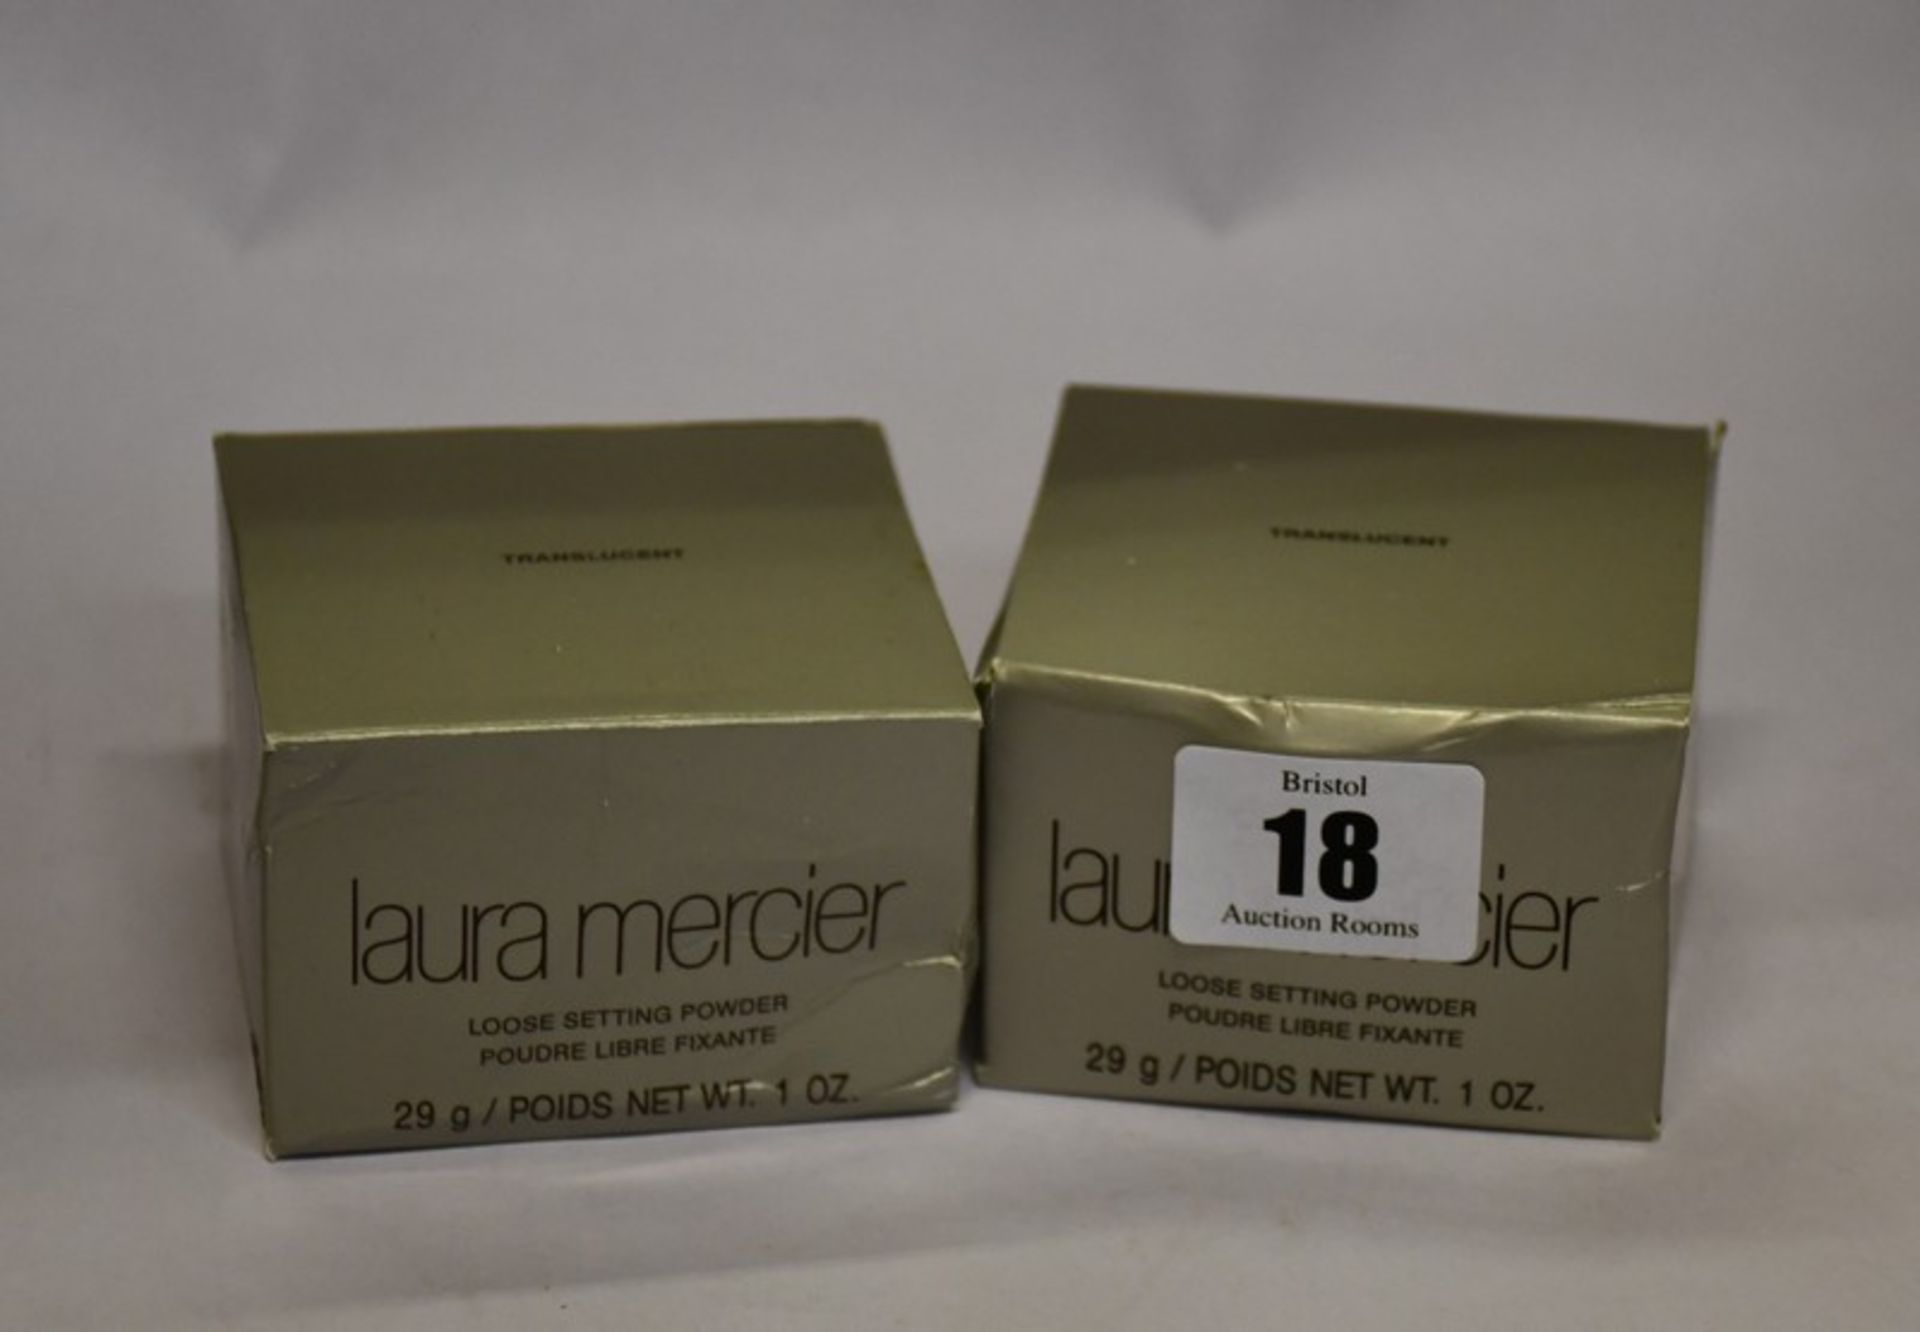 Six boxed as new Laura Mercier Translucent loose setting powders (29g).